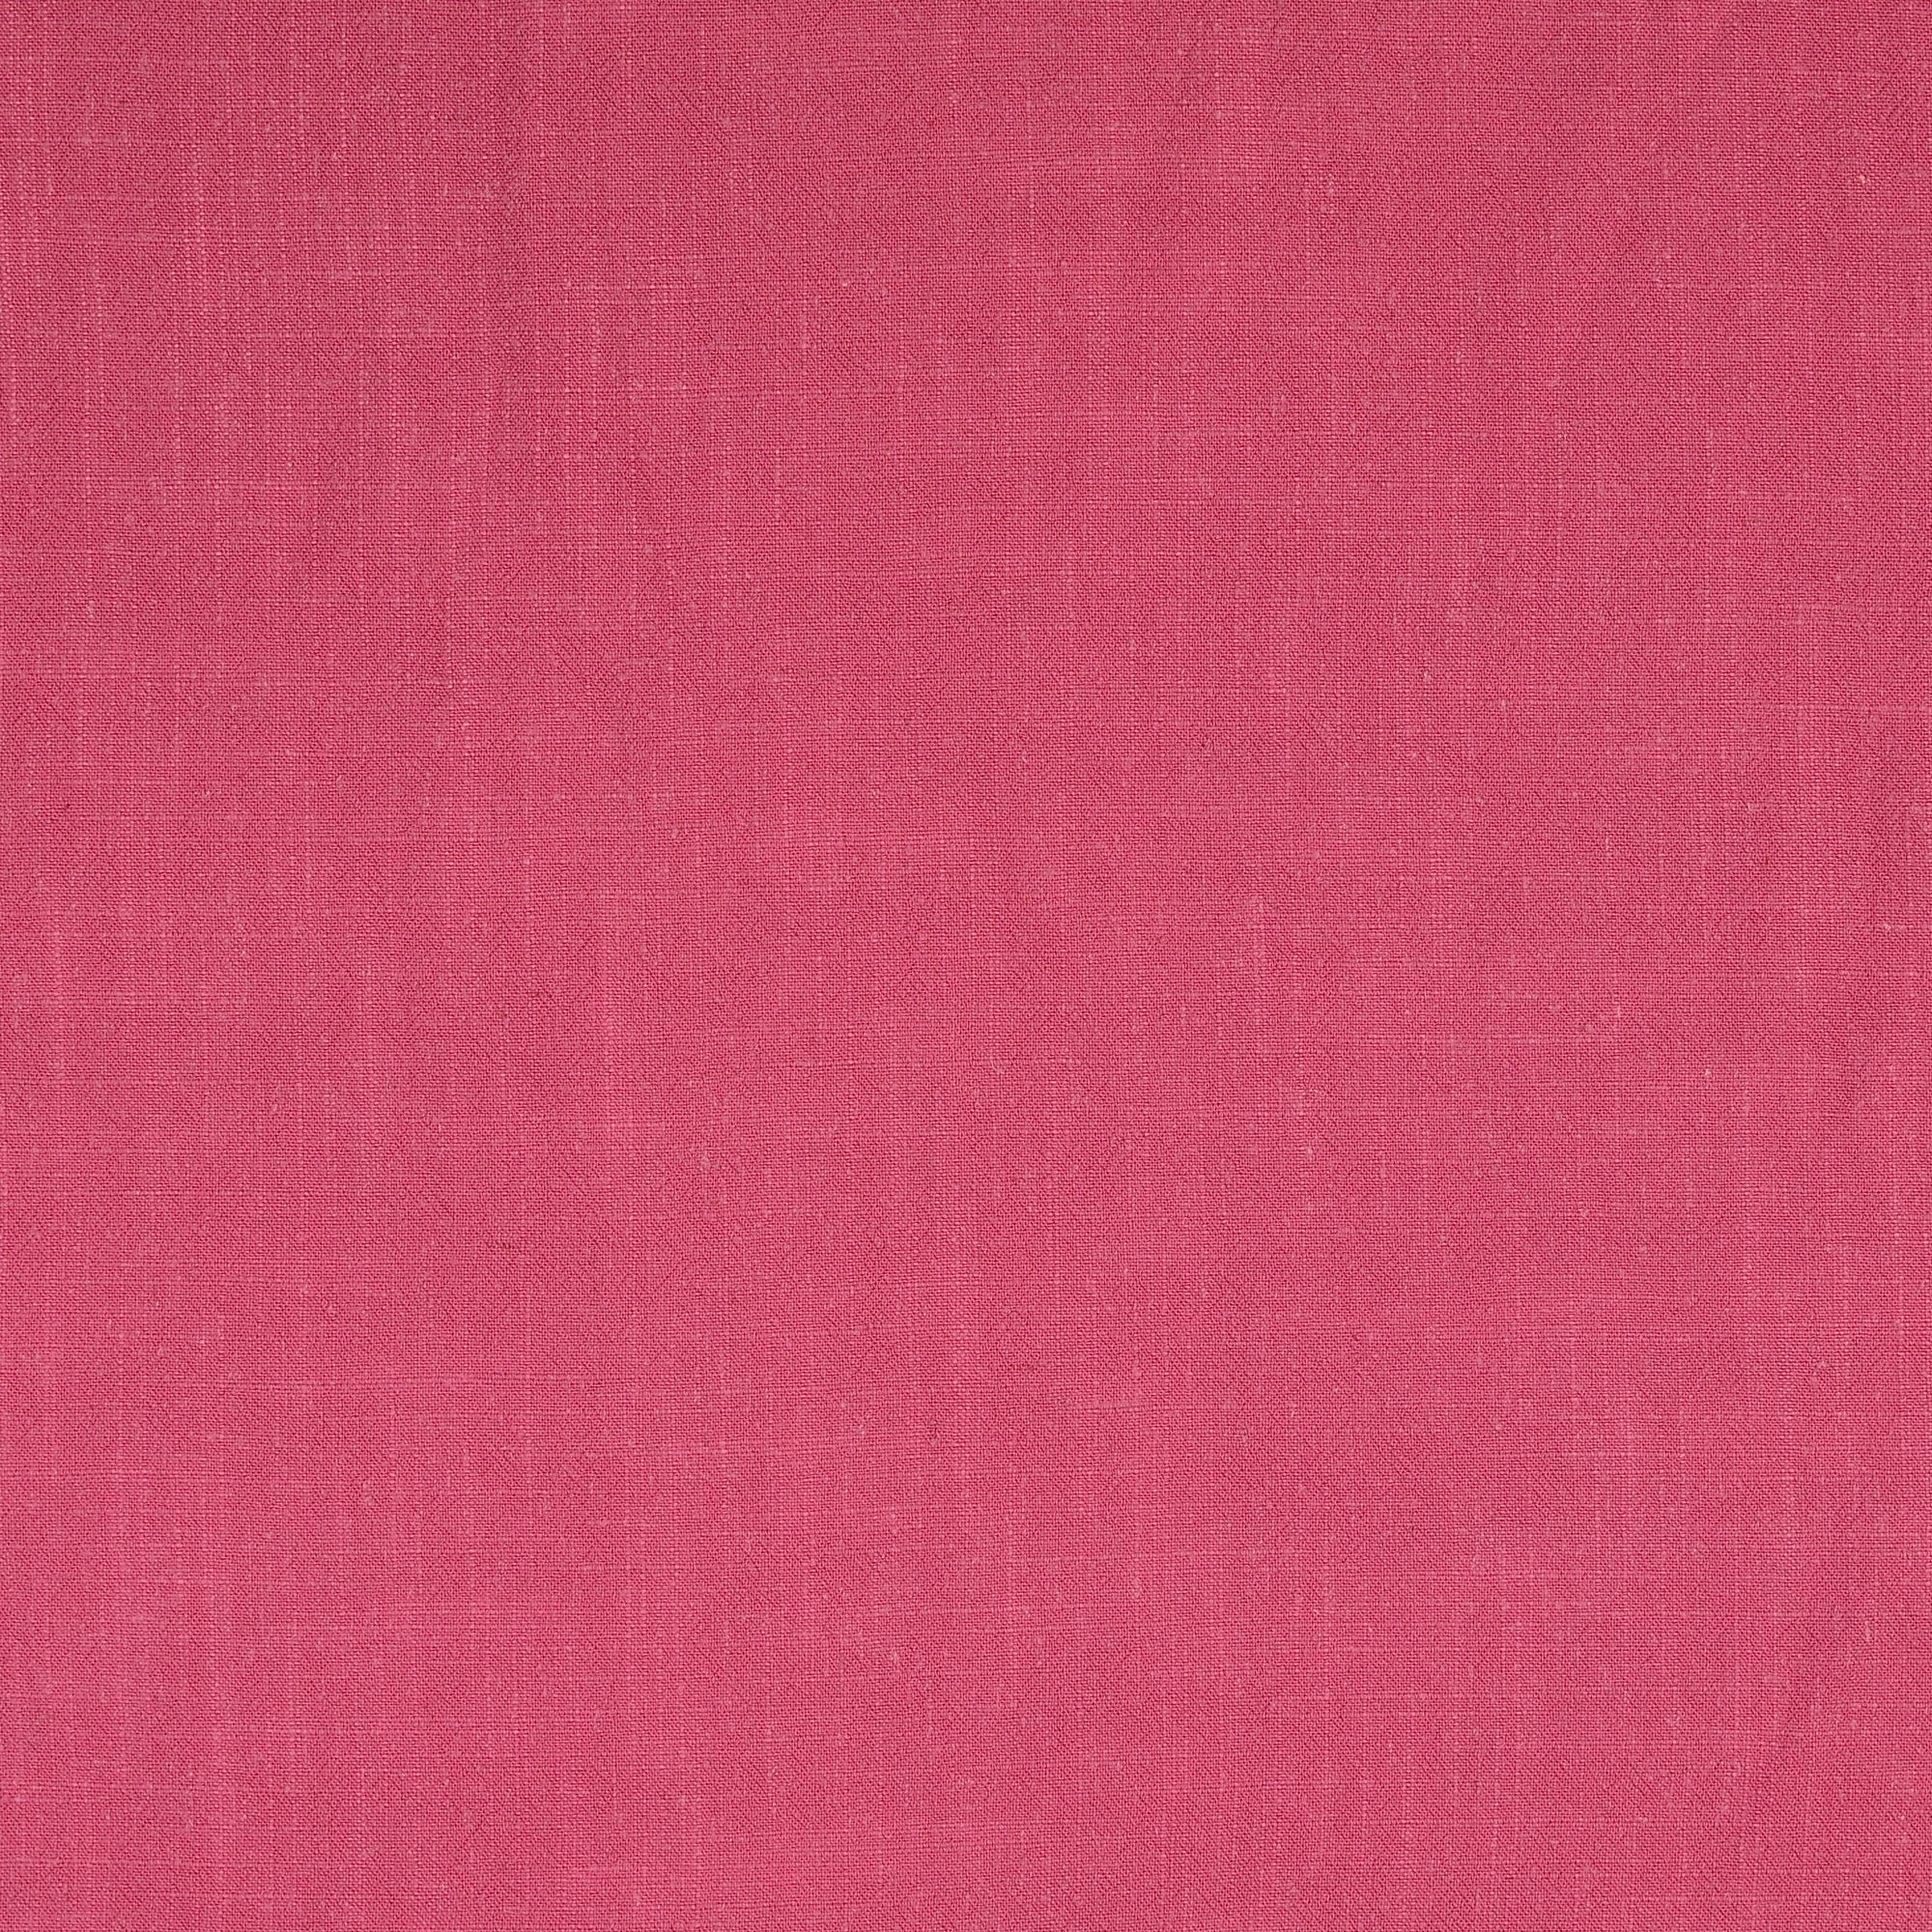 Raspberry Red Viscose Rayon Fabric